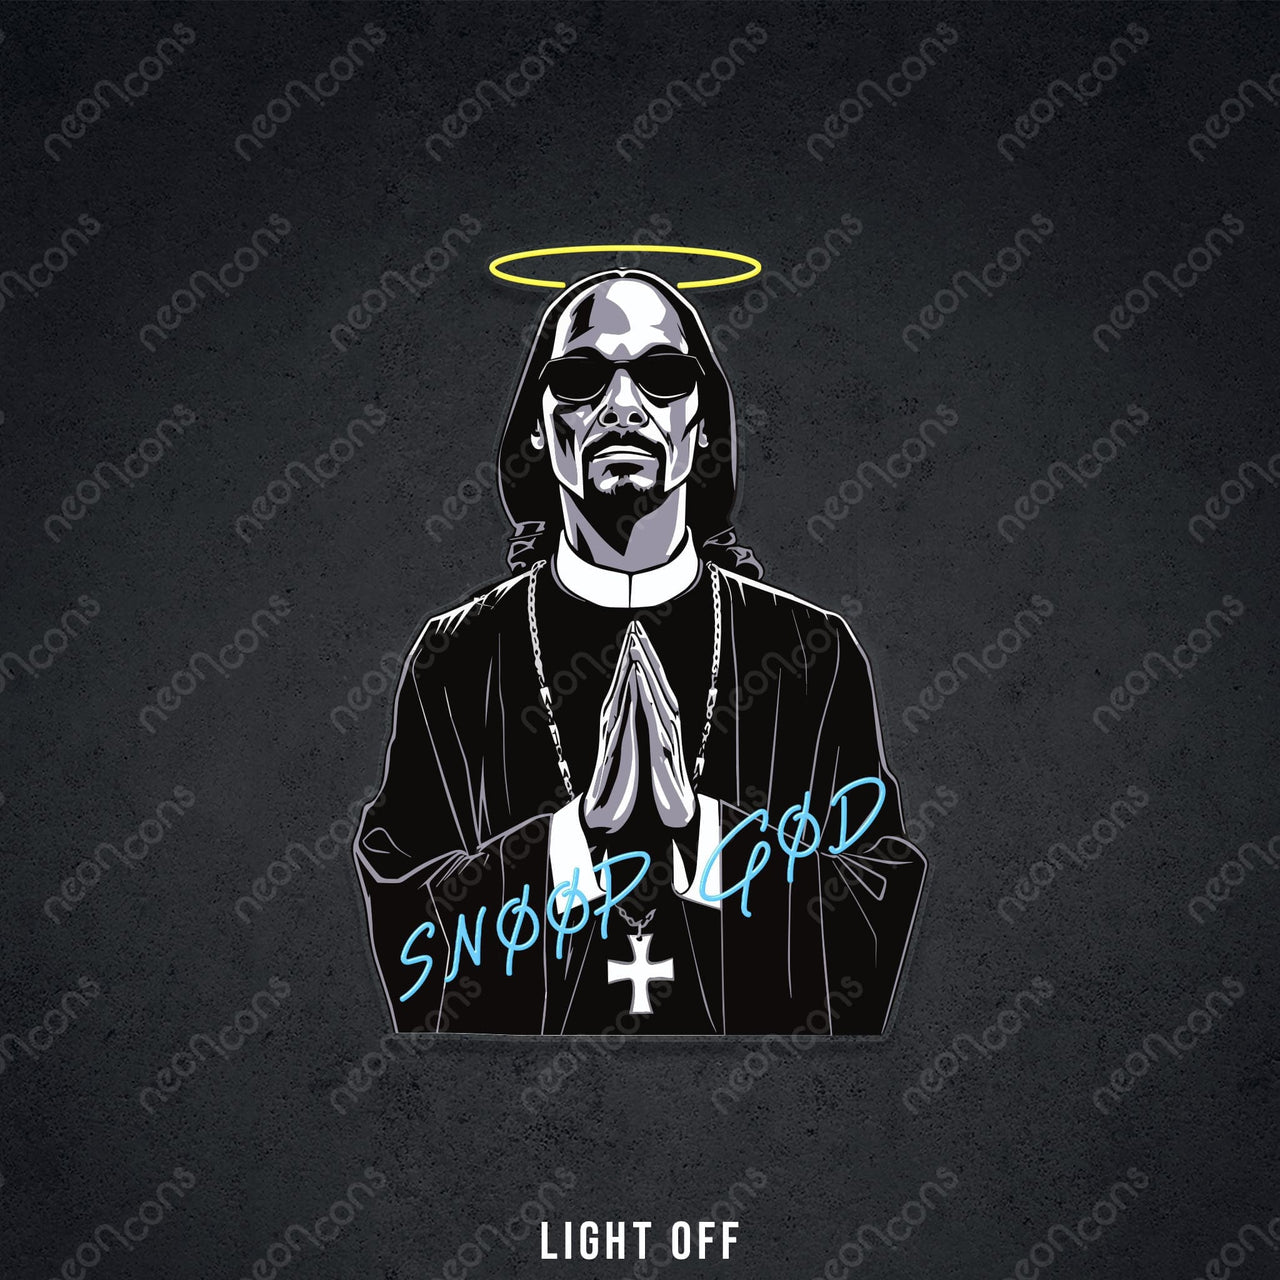 "Snoop God" Neon x Acrylic Artwork by Neon Icons